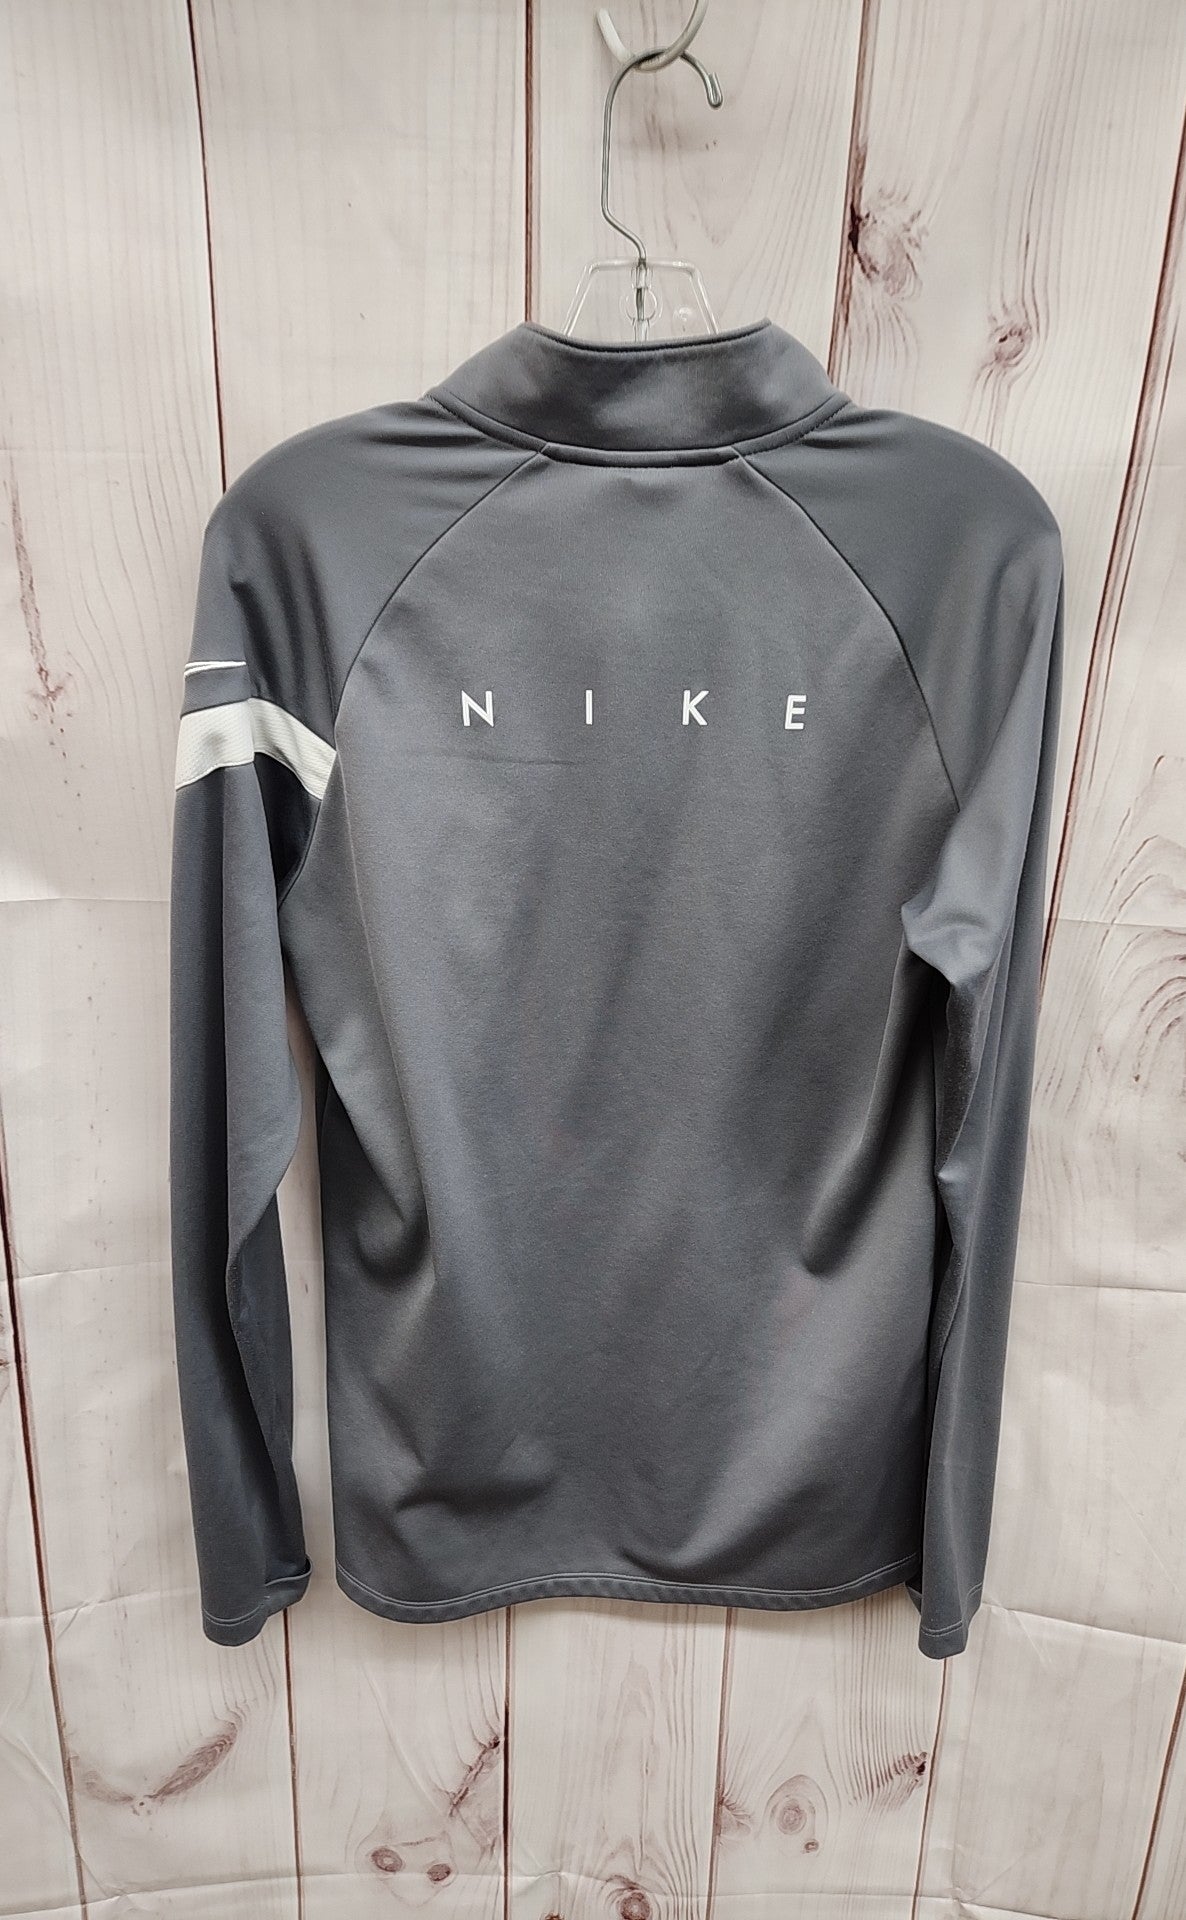 Nike Men's Size S Gray Shirt